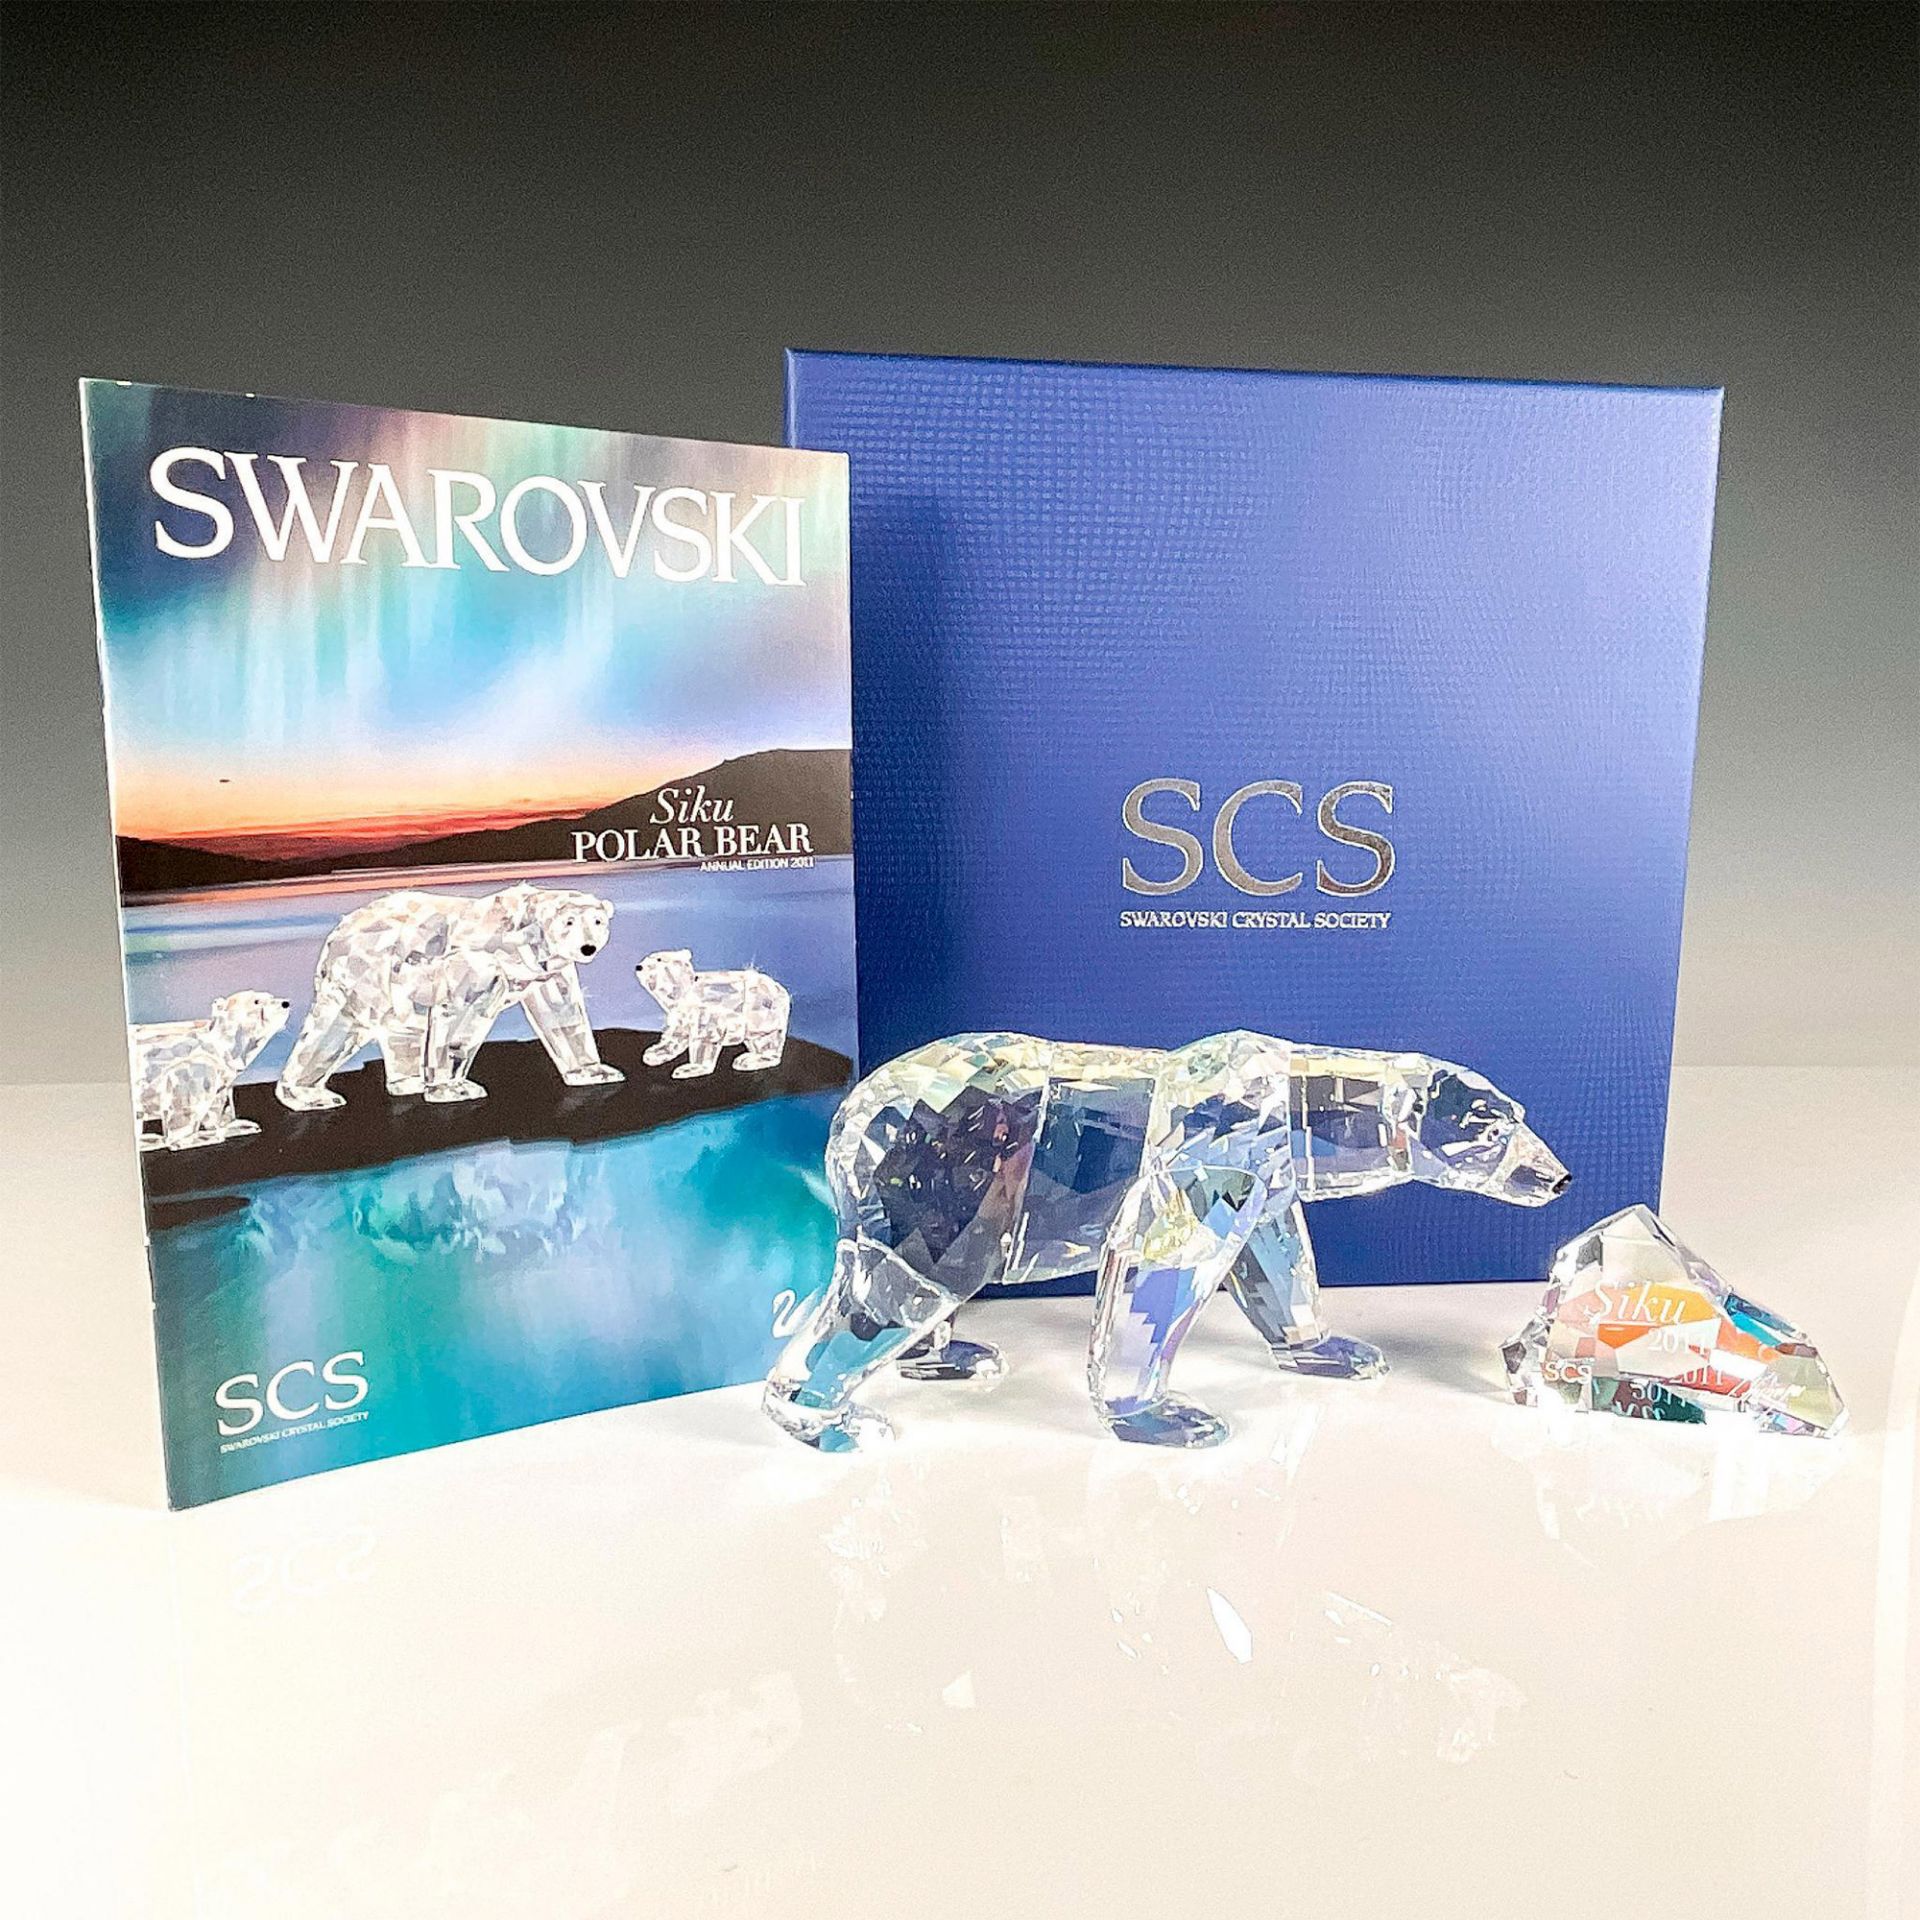 2pc Swarovski Crystal Figurine Siku Polar Bear with Plaque - Image 4 of 4